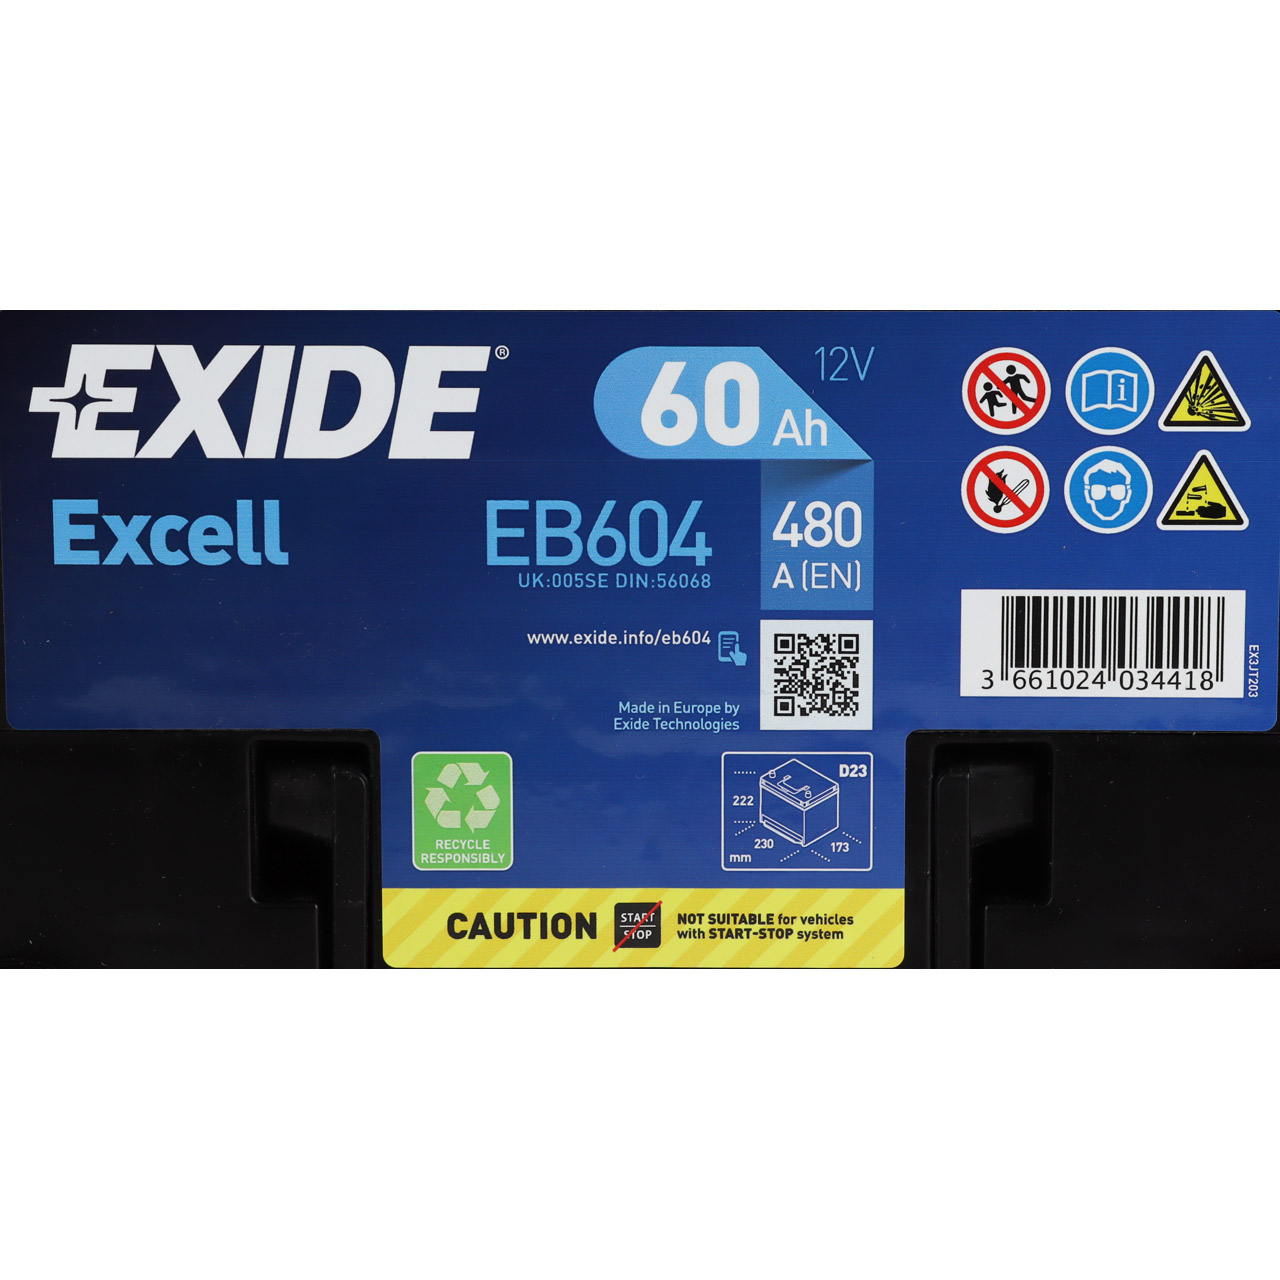 EXIDE EB604 EXCELL Autobatterie Batterie Starterbatterie 12V 60Ah EN480A B01